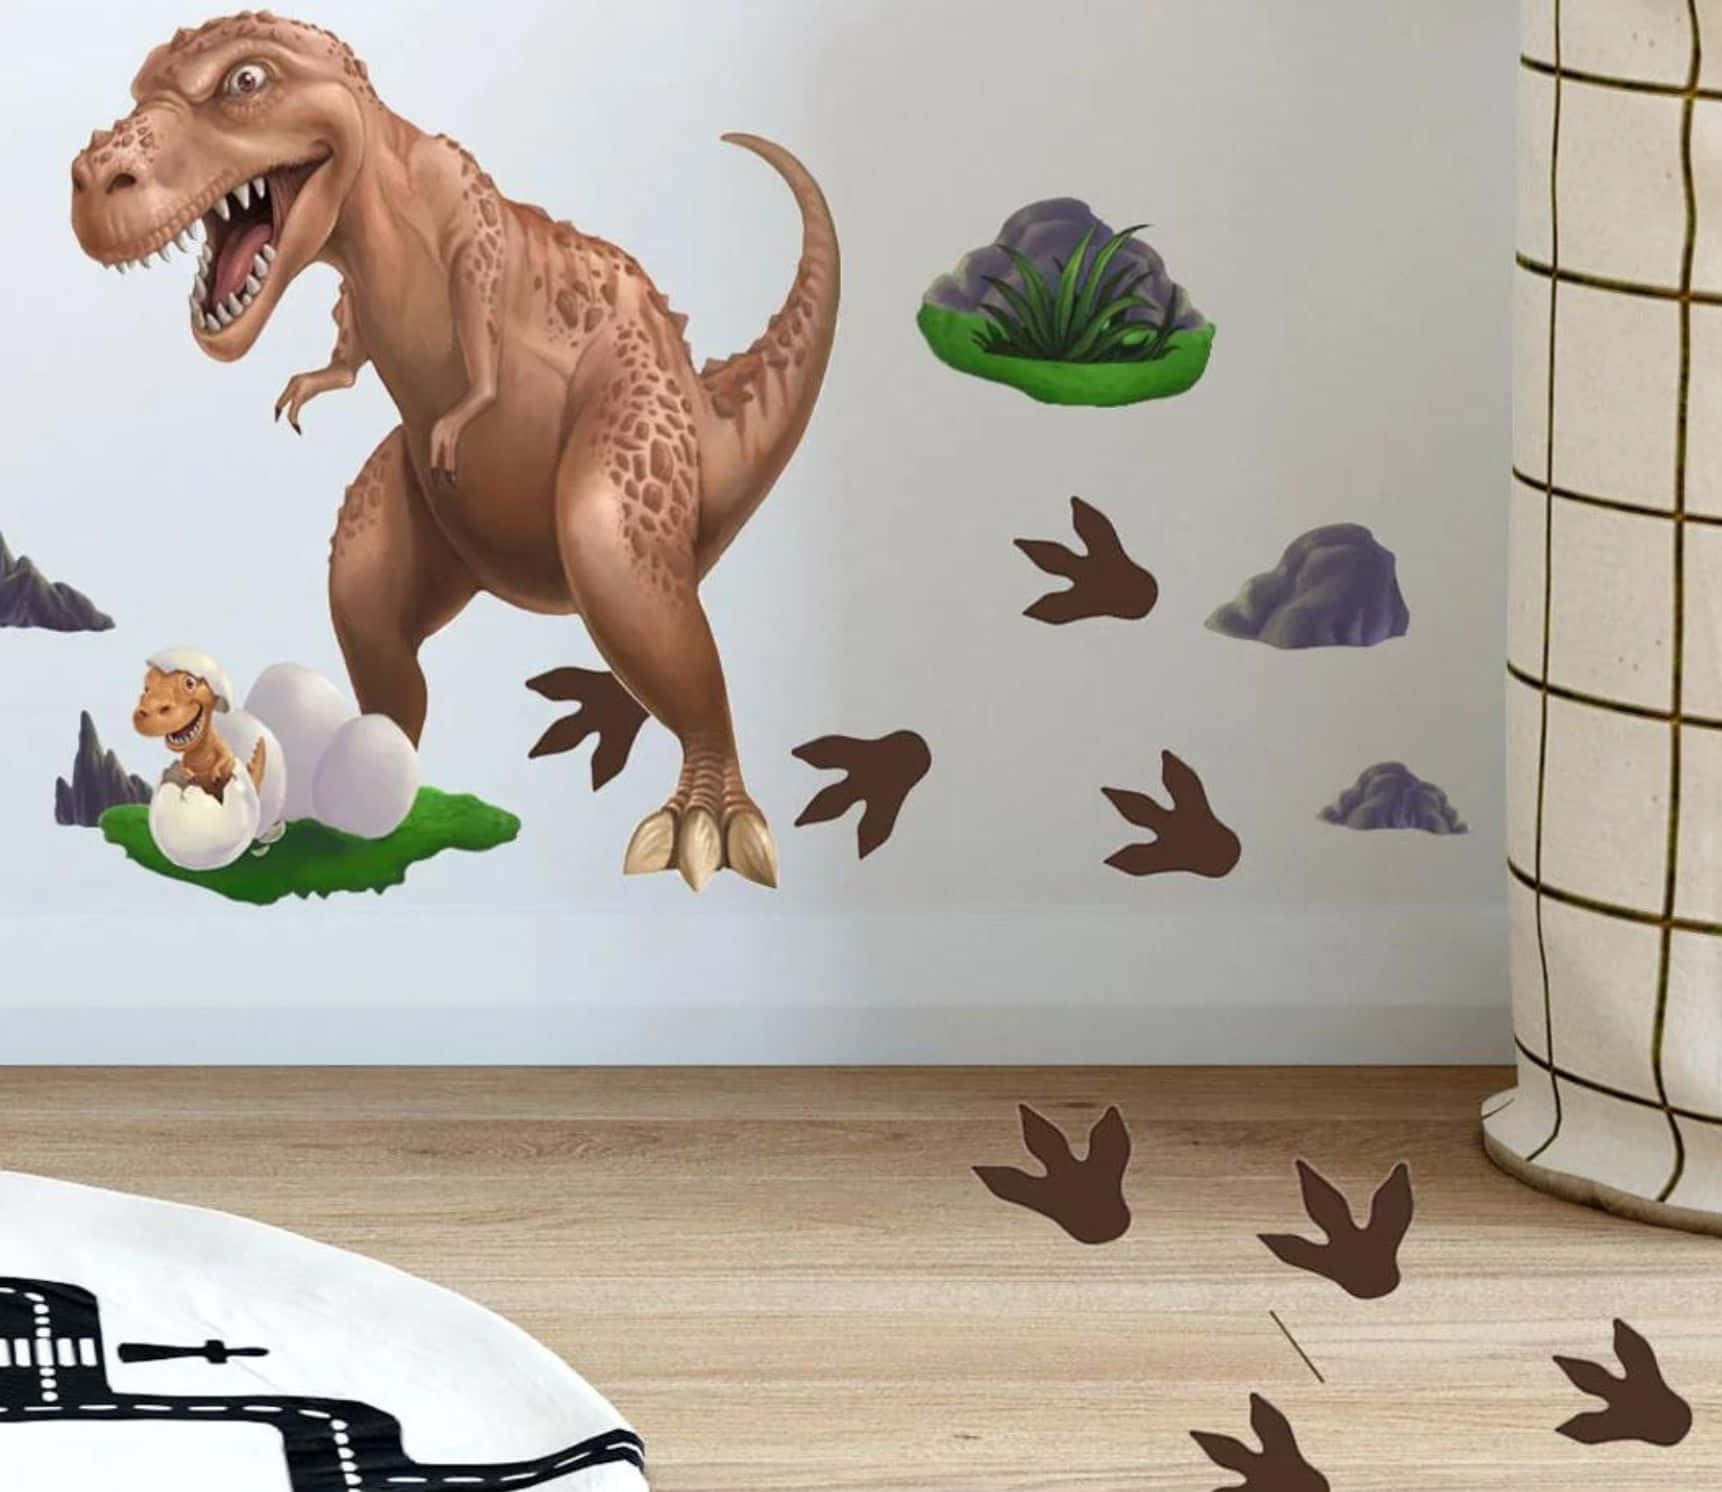 Realistic 3D Dinosaur in a Lush Environment Wallpaper